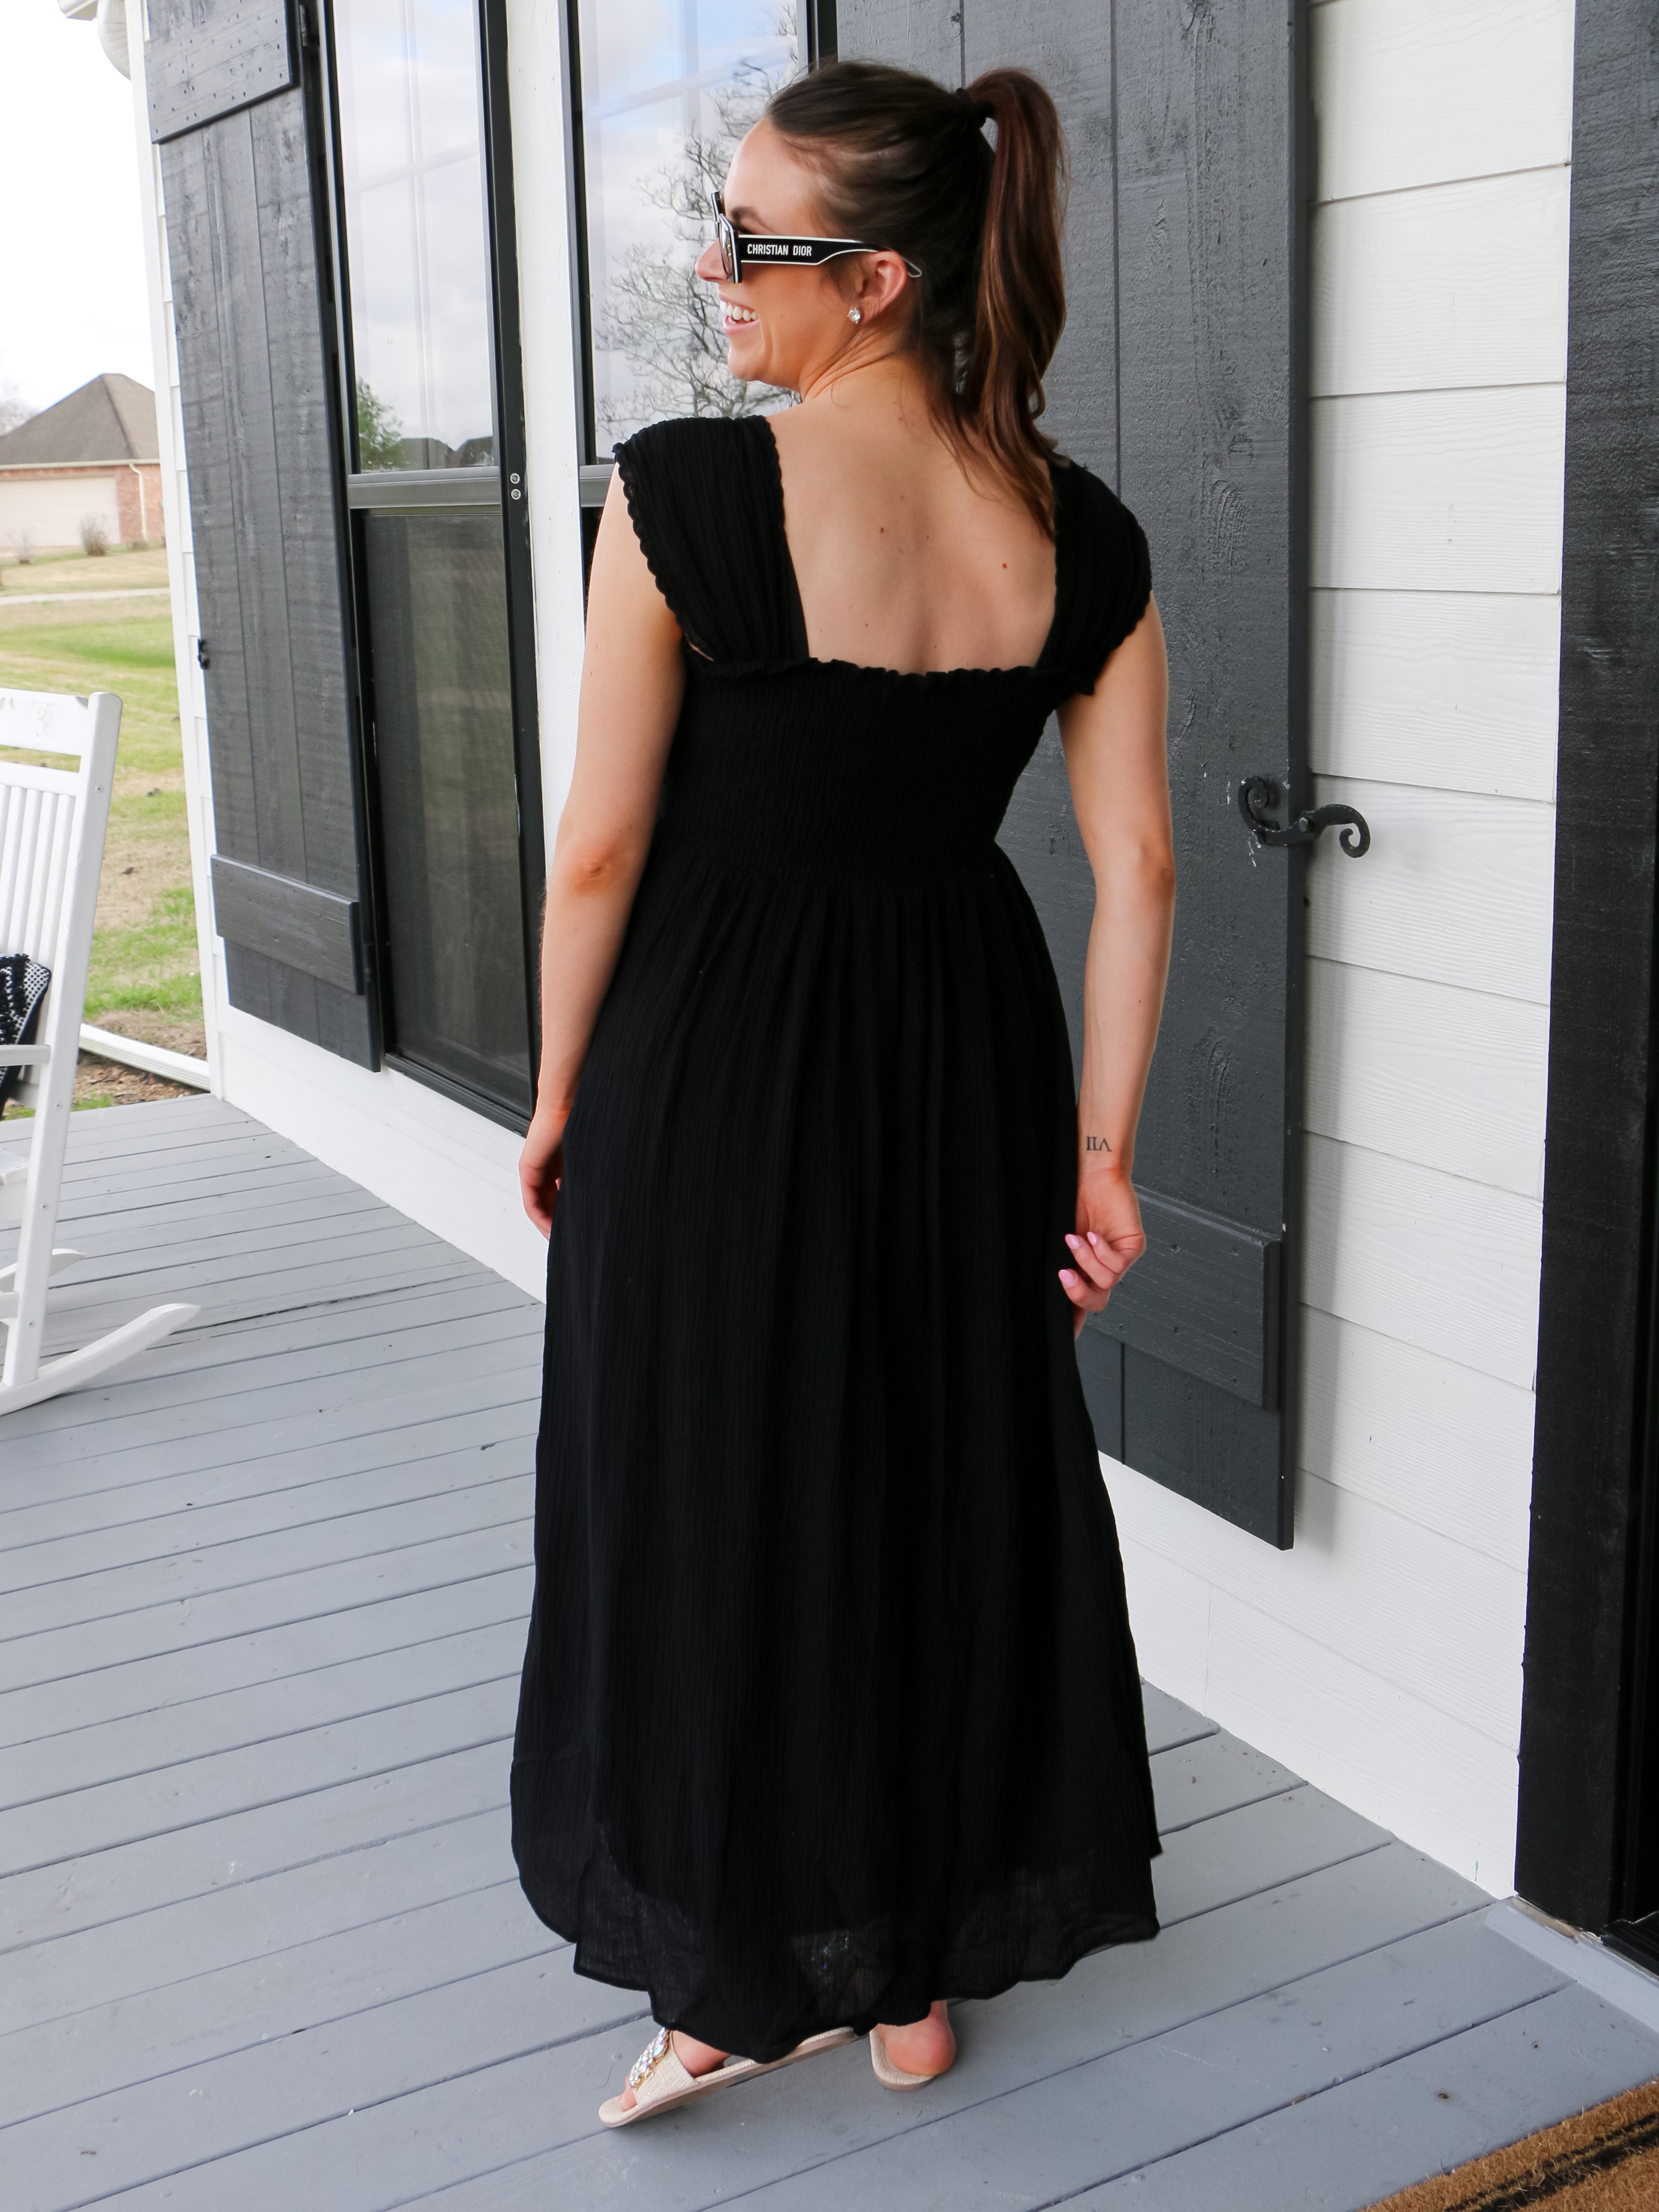 One More Round Black Dress